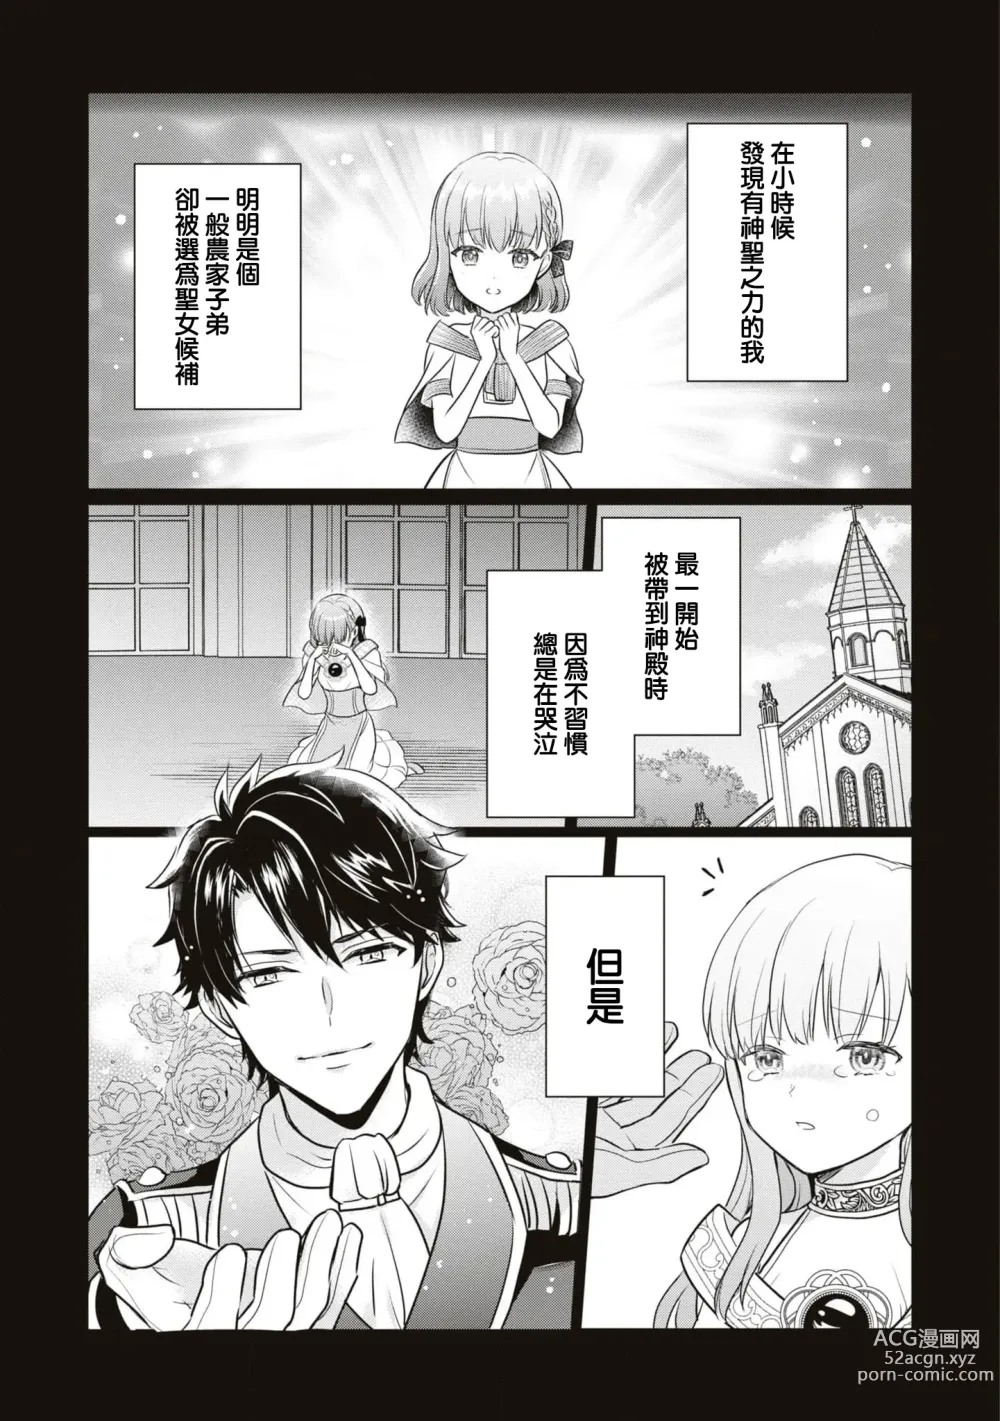 Page 5 of manga 新年才刚开始就失势且不走运、 靠男女交合能提升运气是真的嘛！？